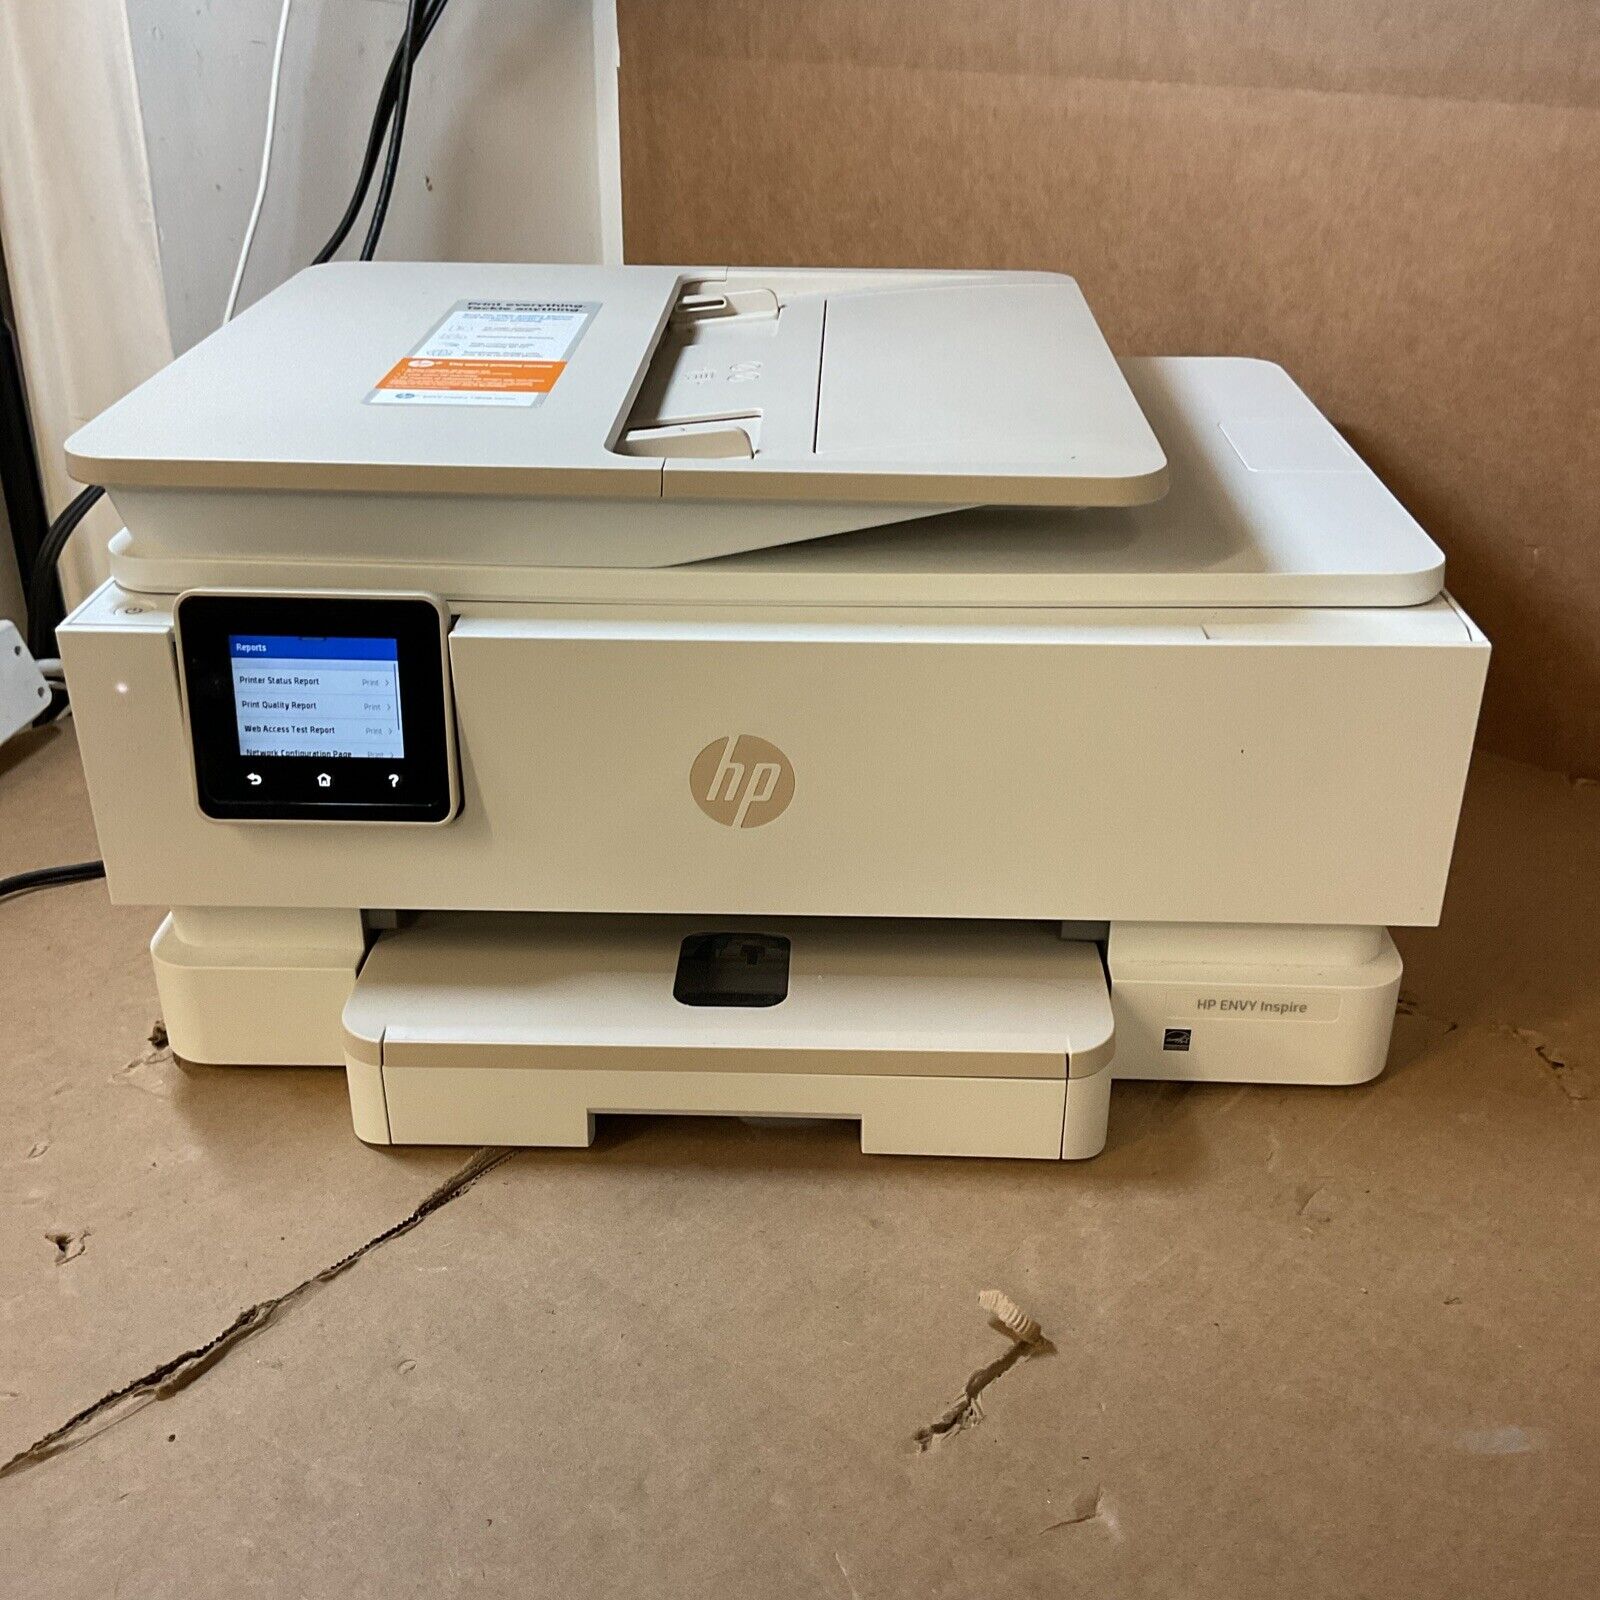 HP Envy Inspire 7900e series Wi-Fi All In One Color Printer